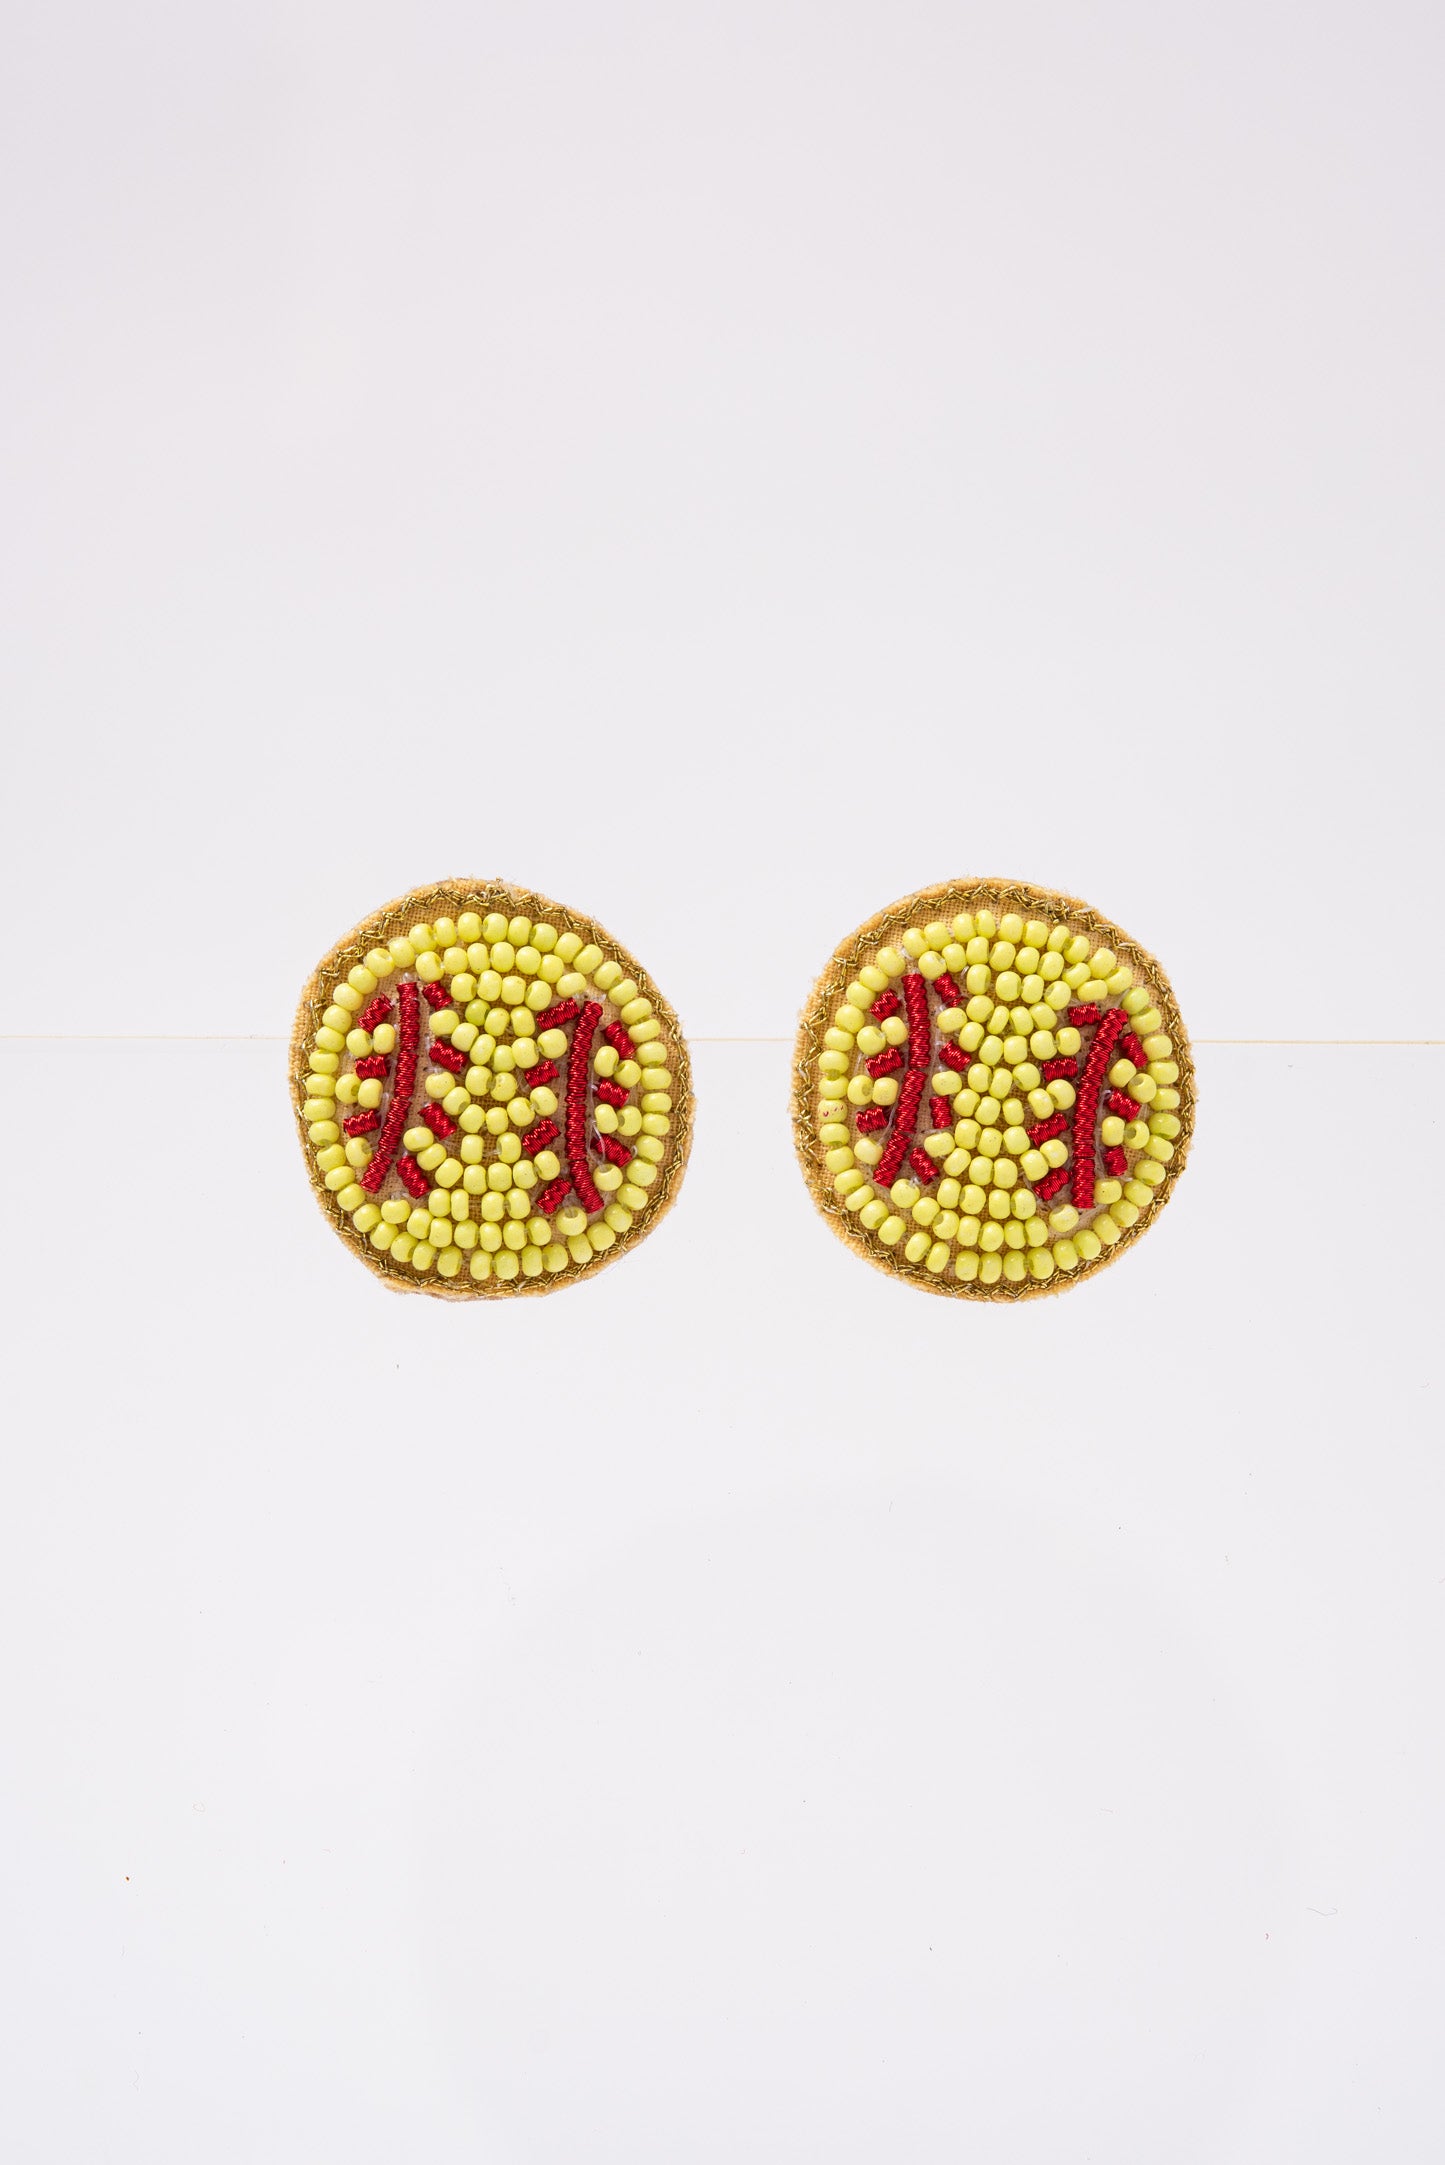 Sarah Softball Beaded Embroidery Stud Earrings - Yellow